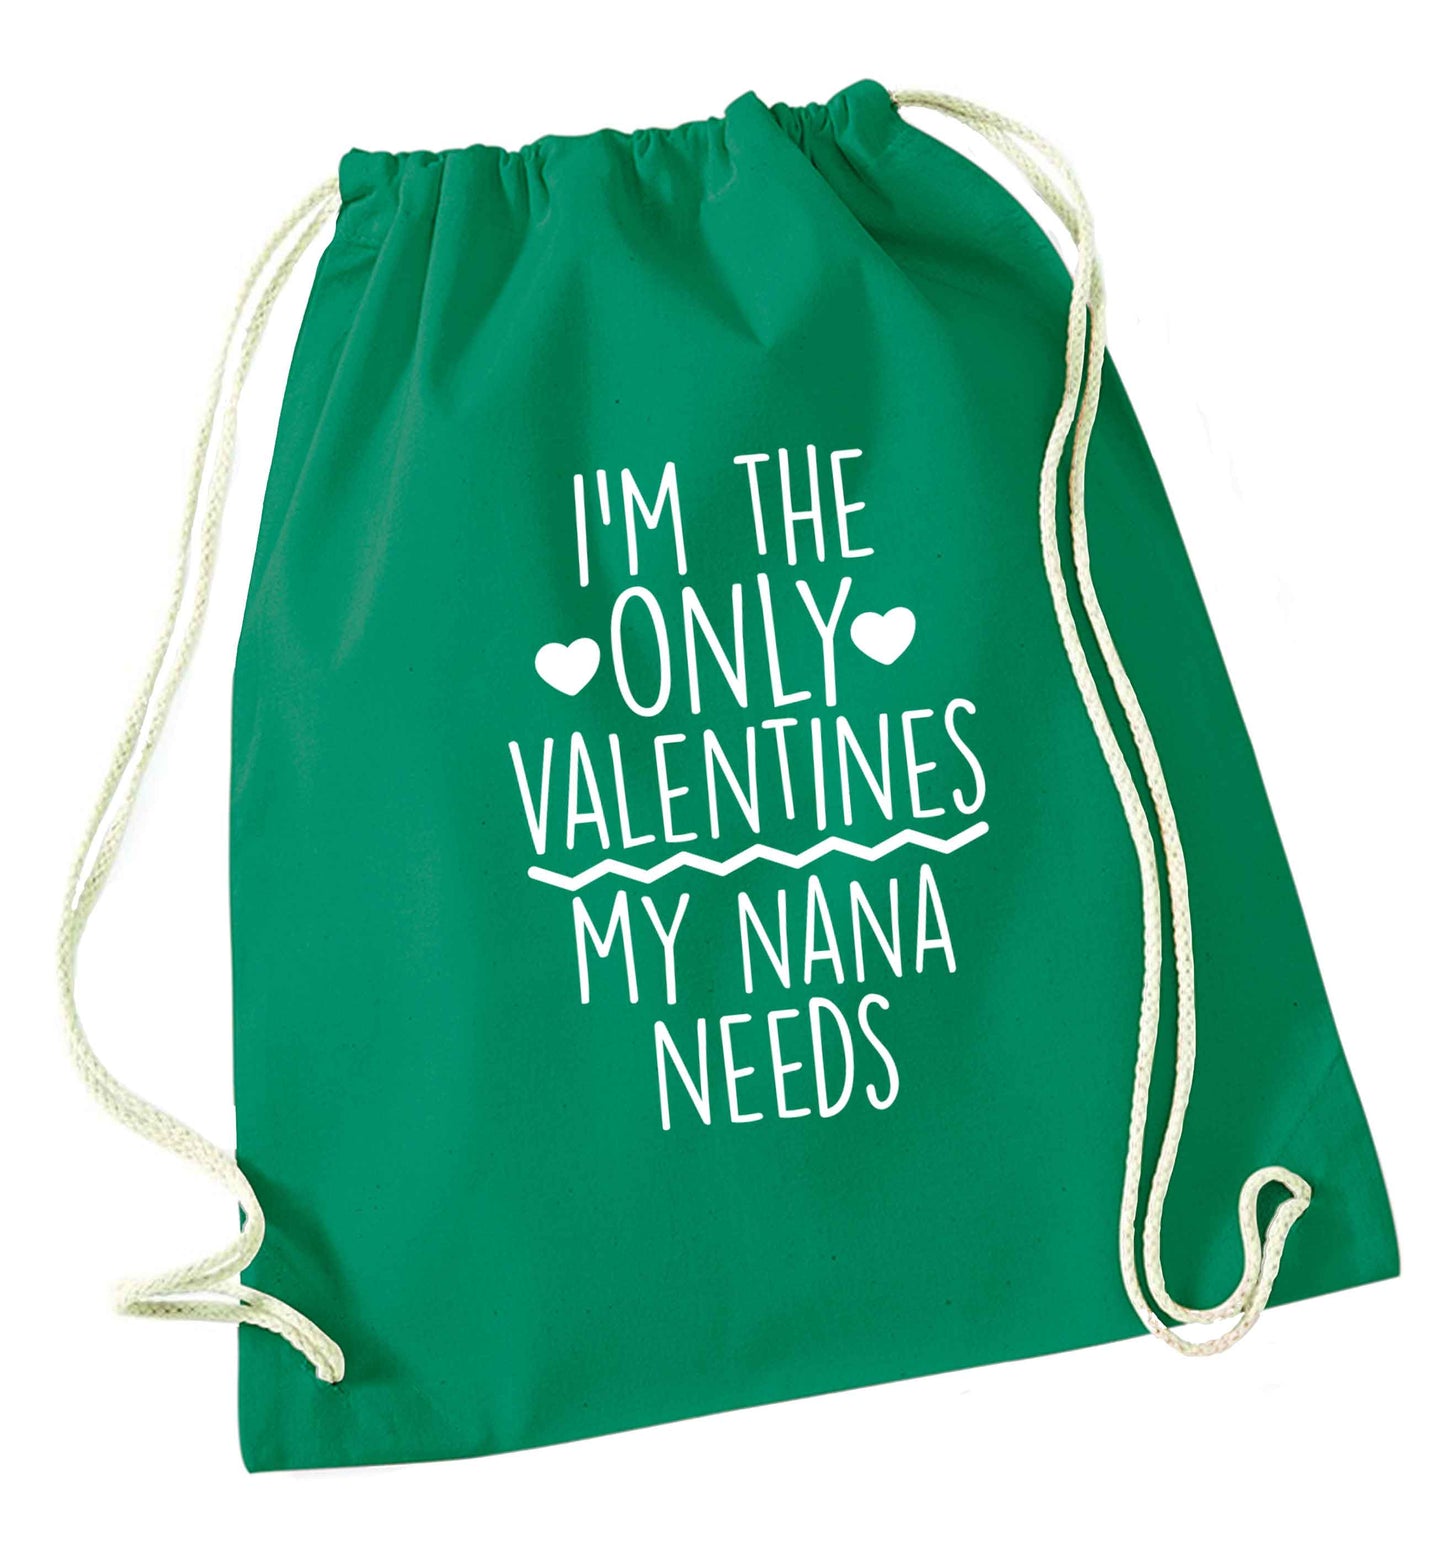 I'm the only valentines my nana needs green drawstring bag